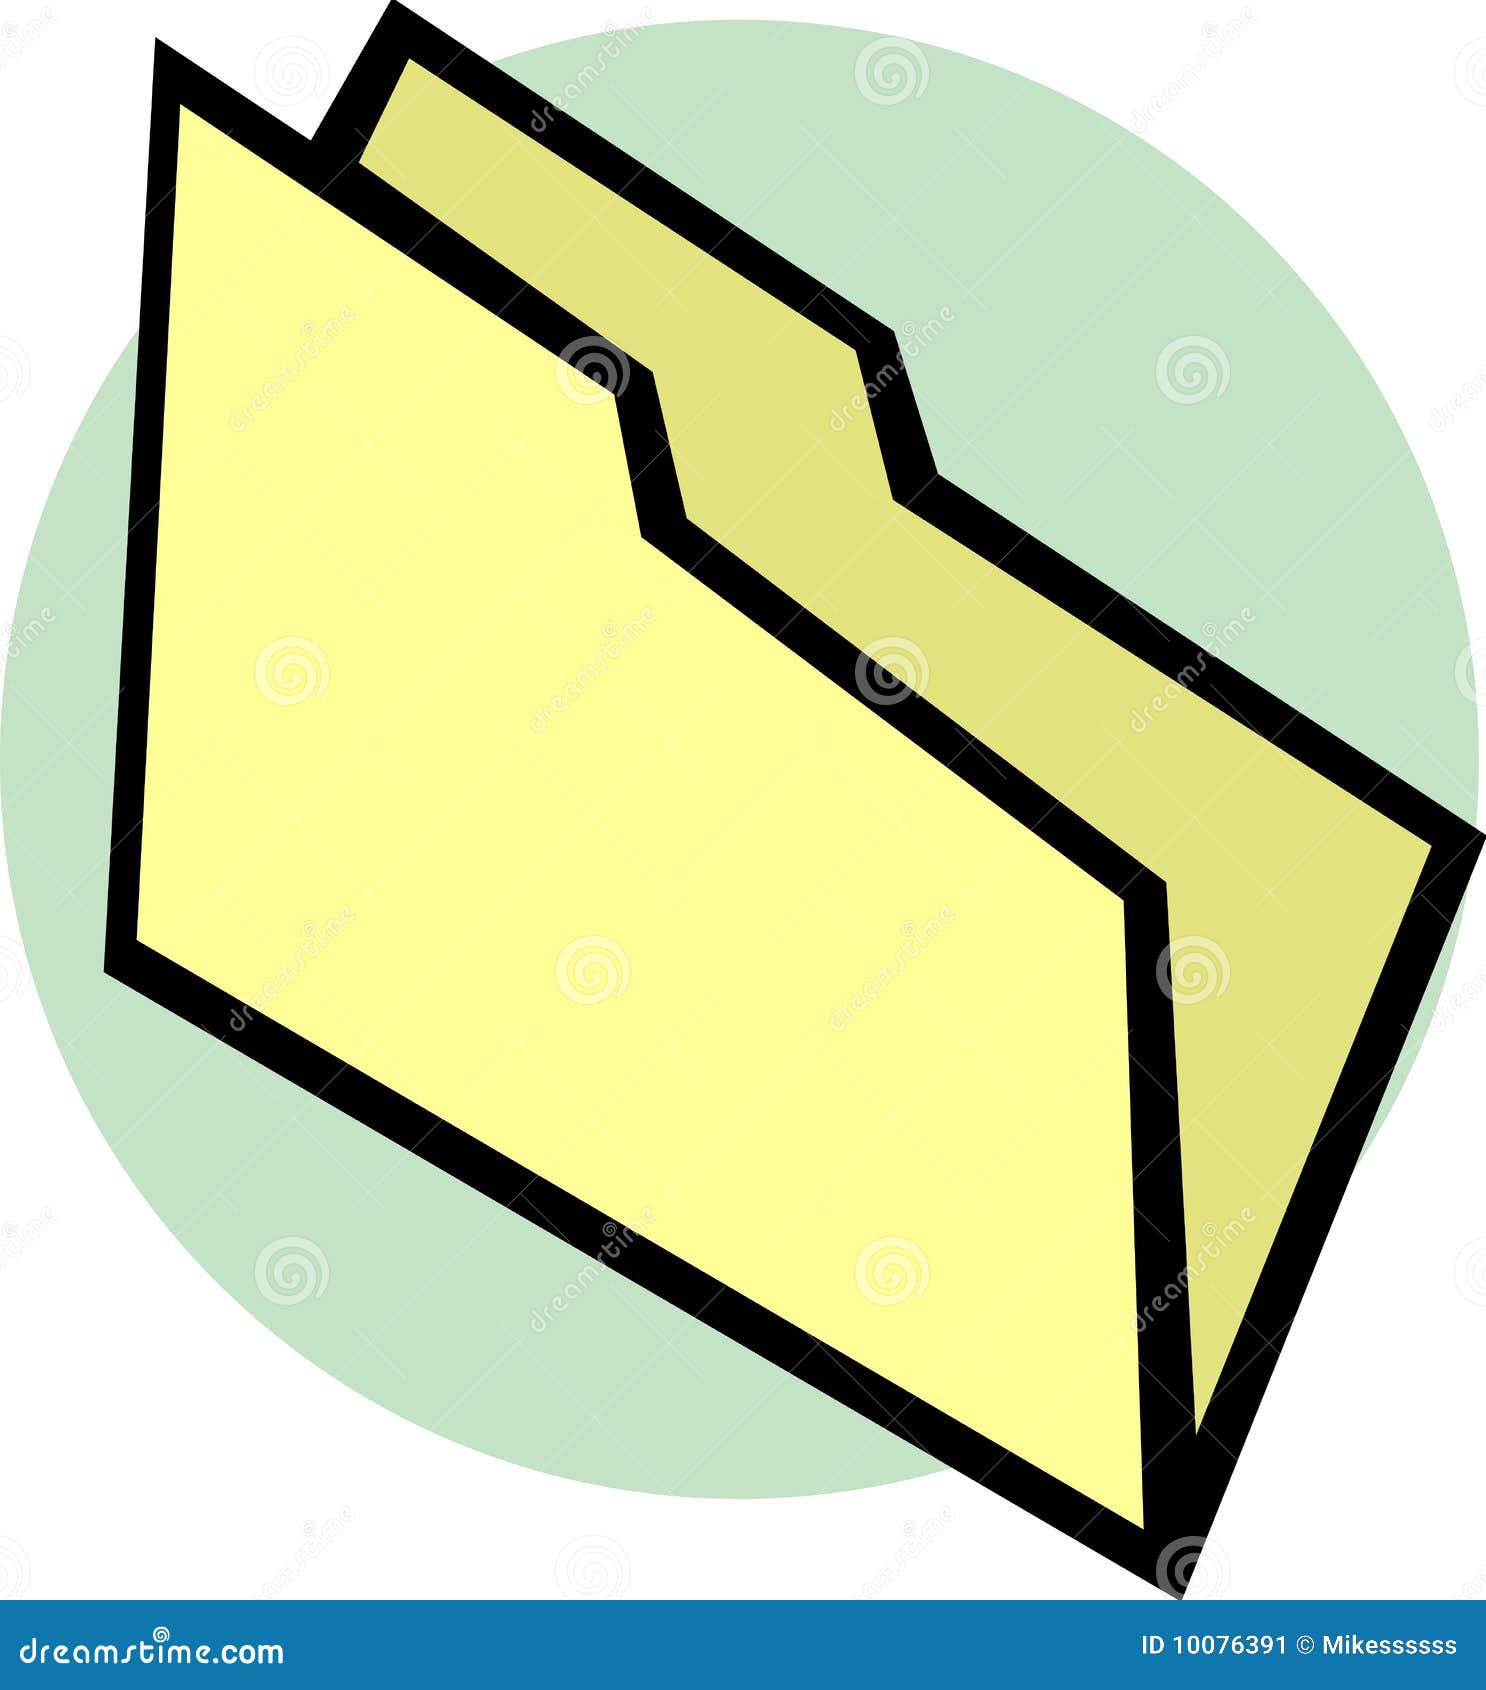 Empty File Folder Vector Illustration Stock Image - Image ...
